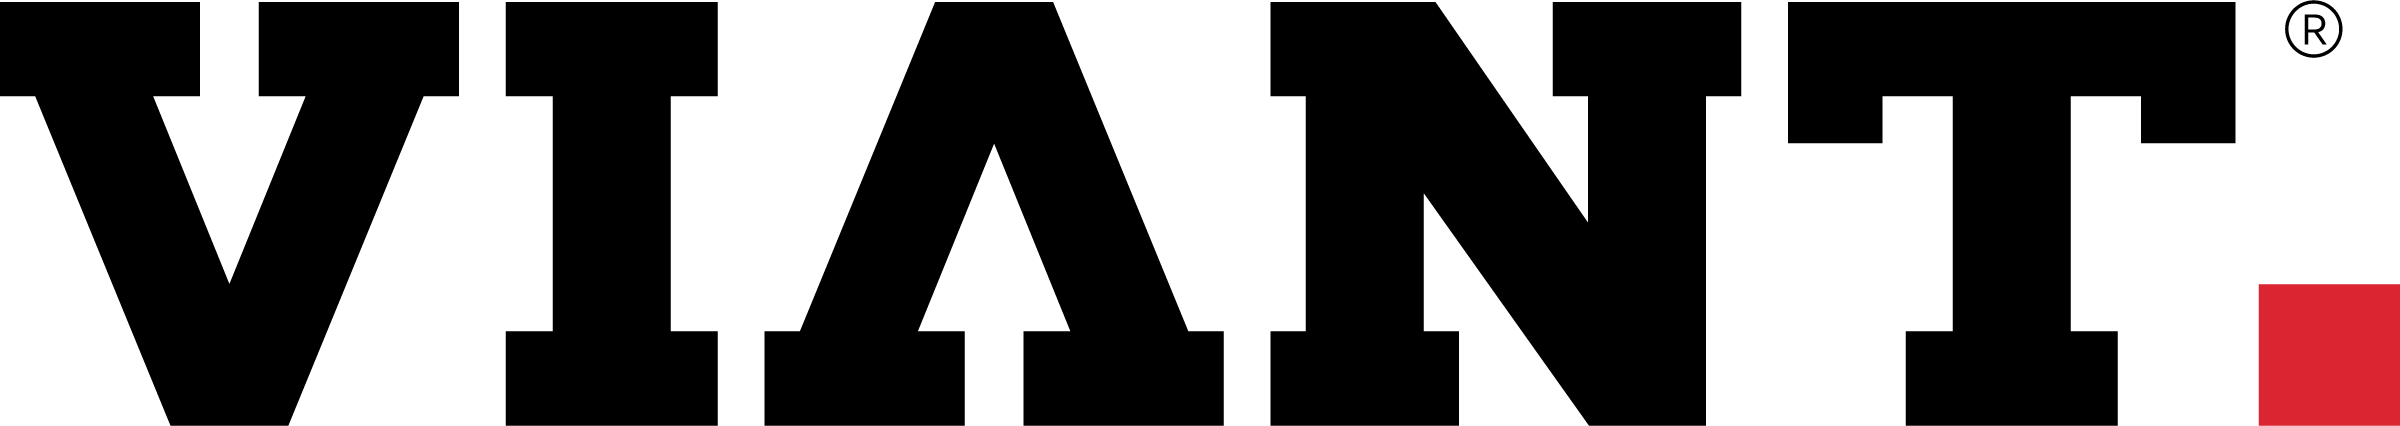 Viant logo